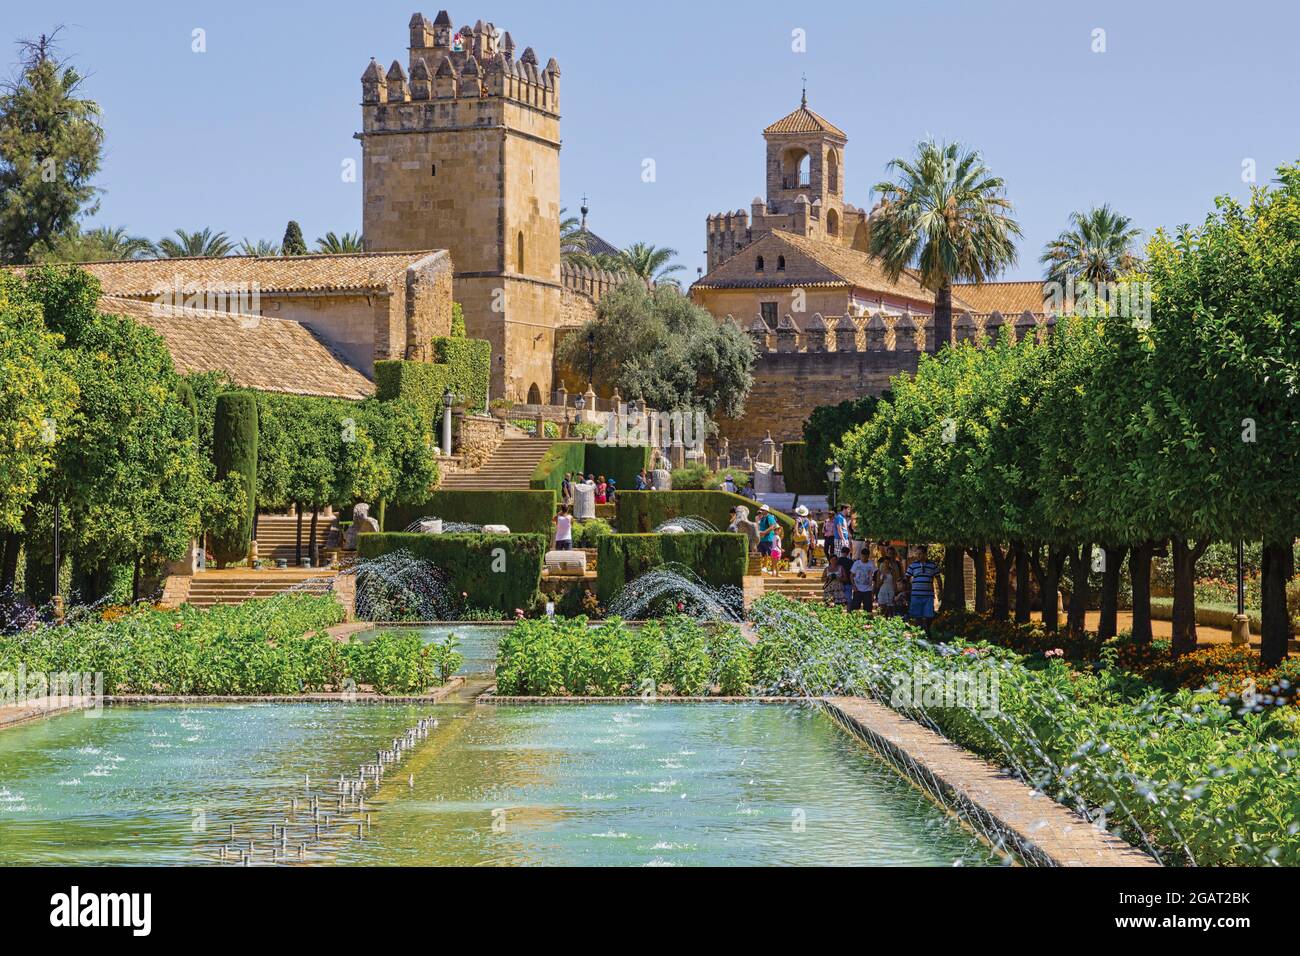 Pool in the Lower Garden, Alcazar de los Reyes Cristianos, Cordoba, Cordoba Province, Andalusia, Spain.  The Historic Centre of Cordoba is a UNESCO Wo Stock Photo